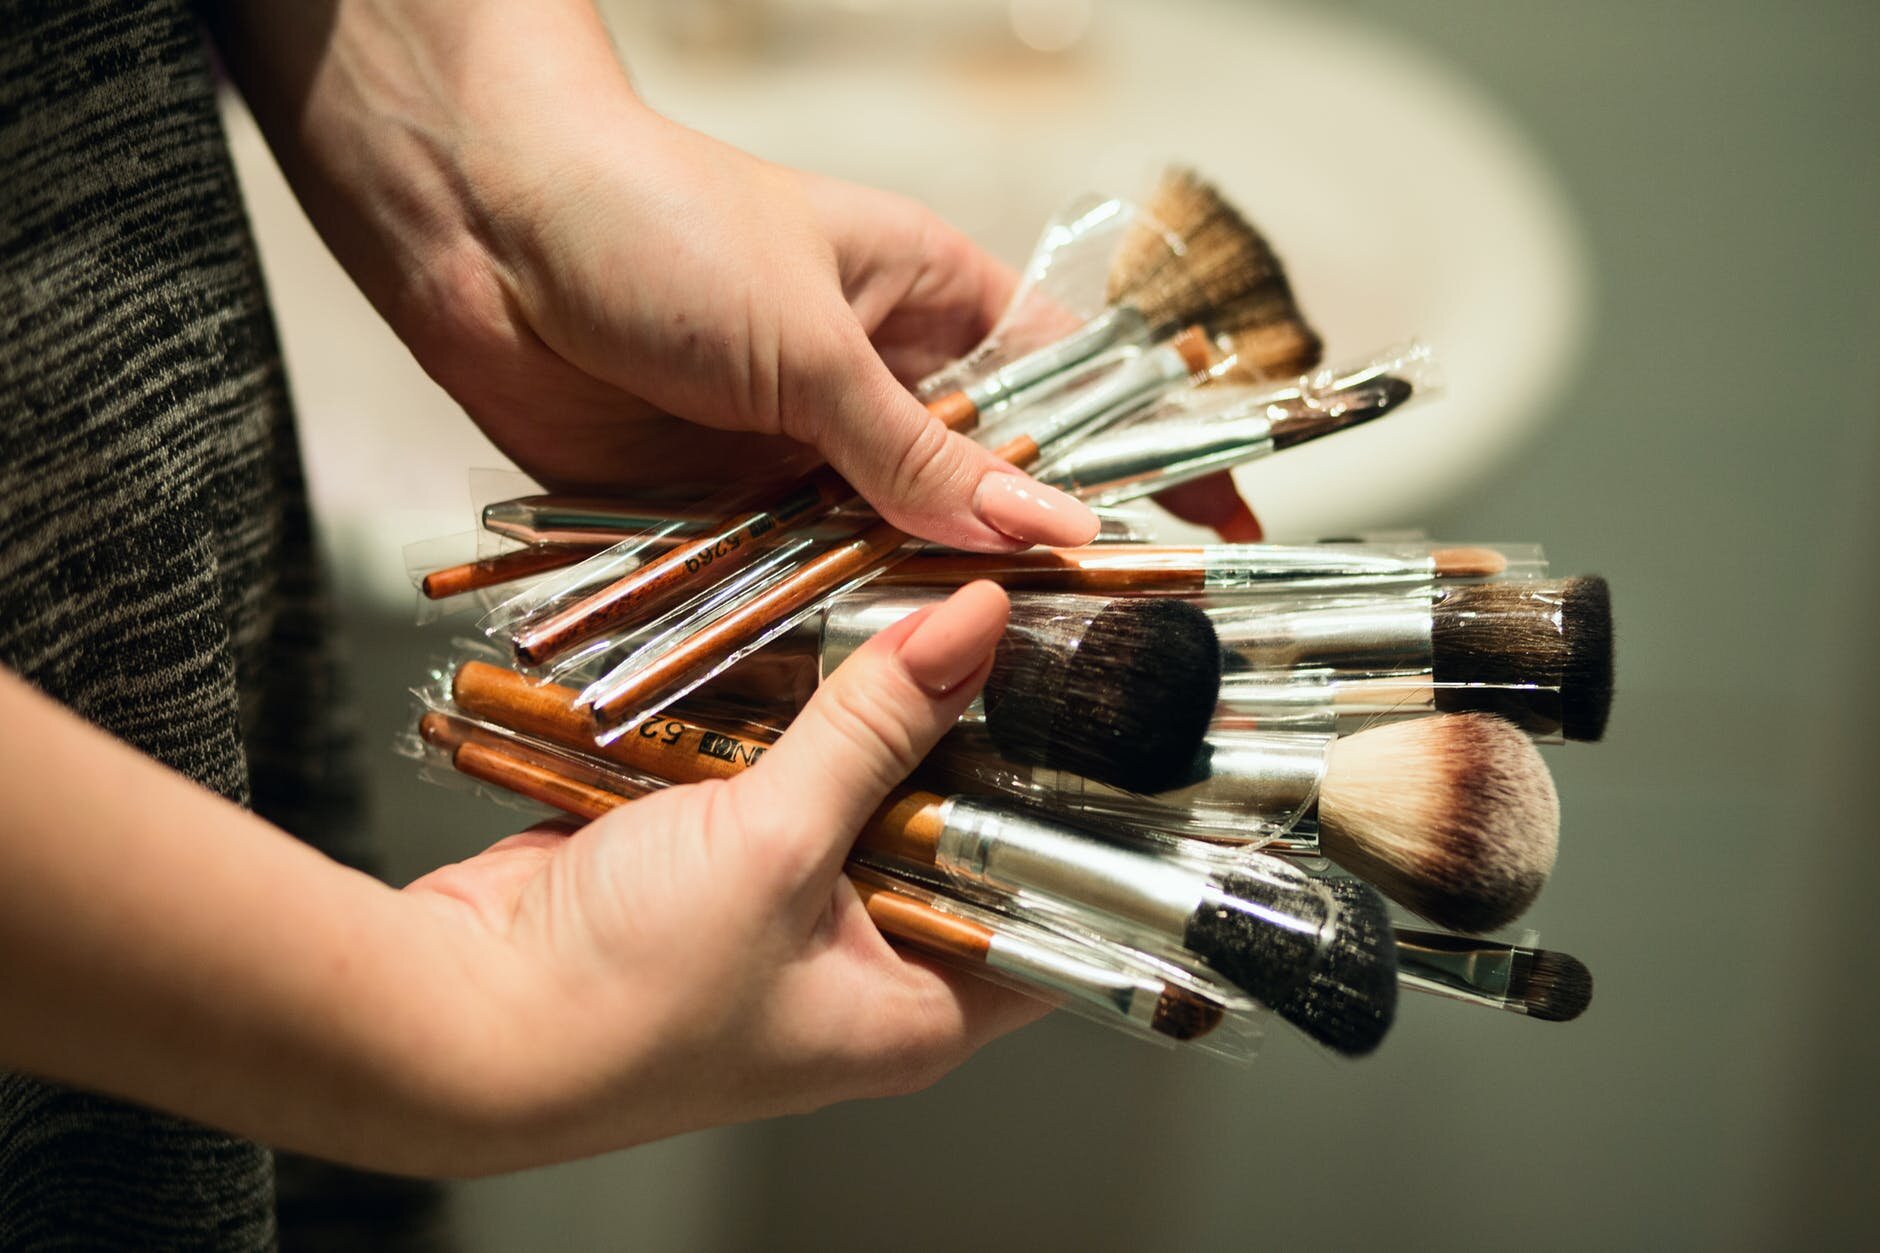 Building your Pro Kit: Essentials Every Beginner Makeup Artist Needs  (Budget-Friendly!) 